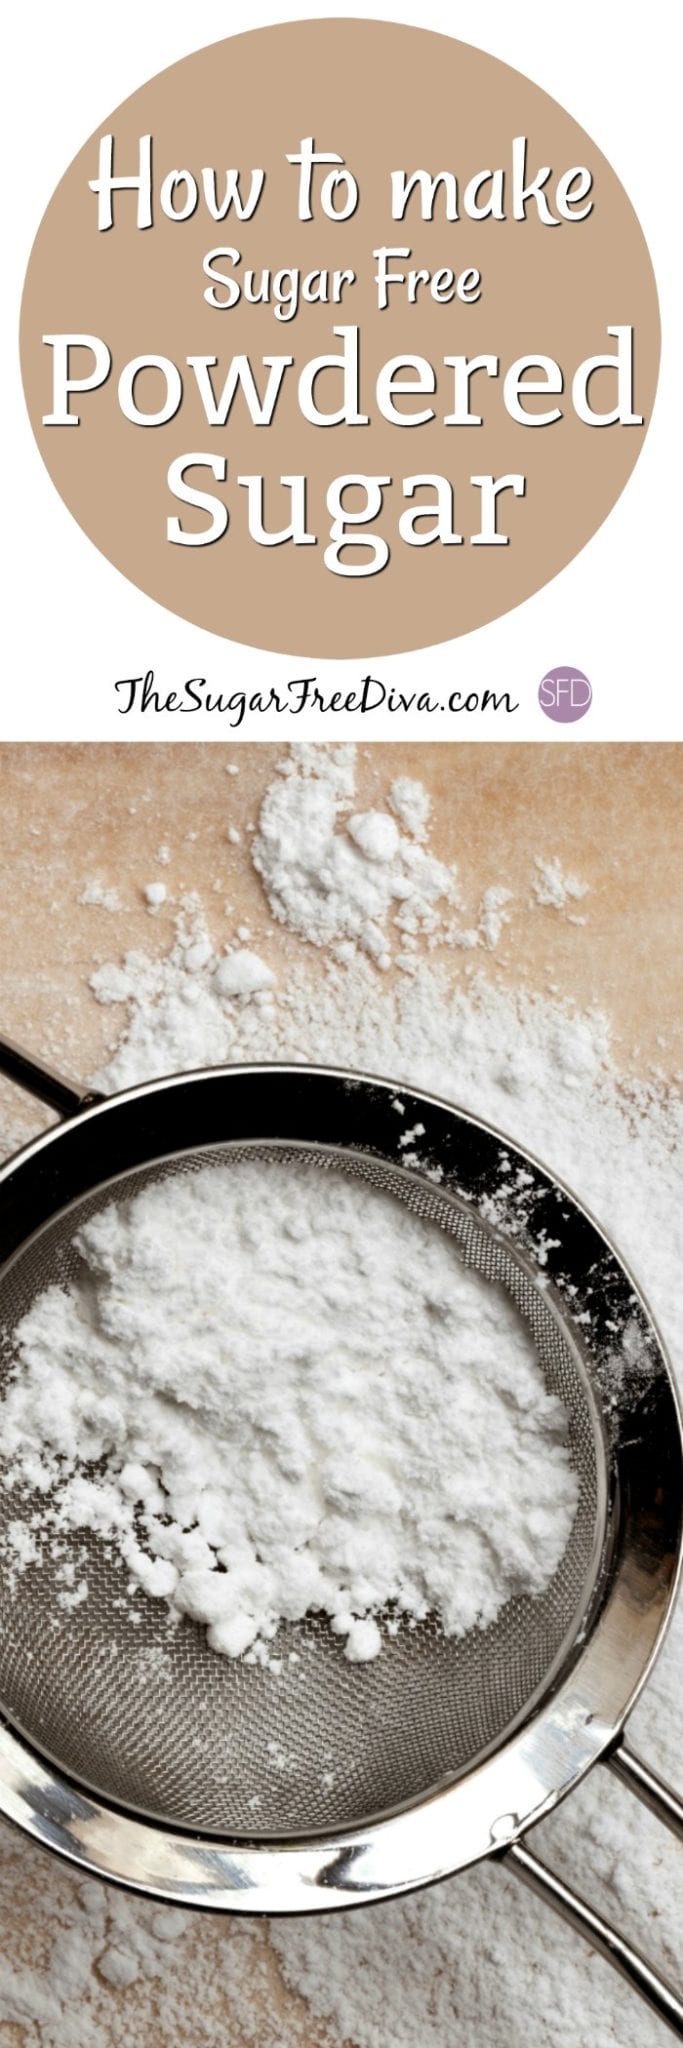 How to Make Sugar Free Powdered Sugar